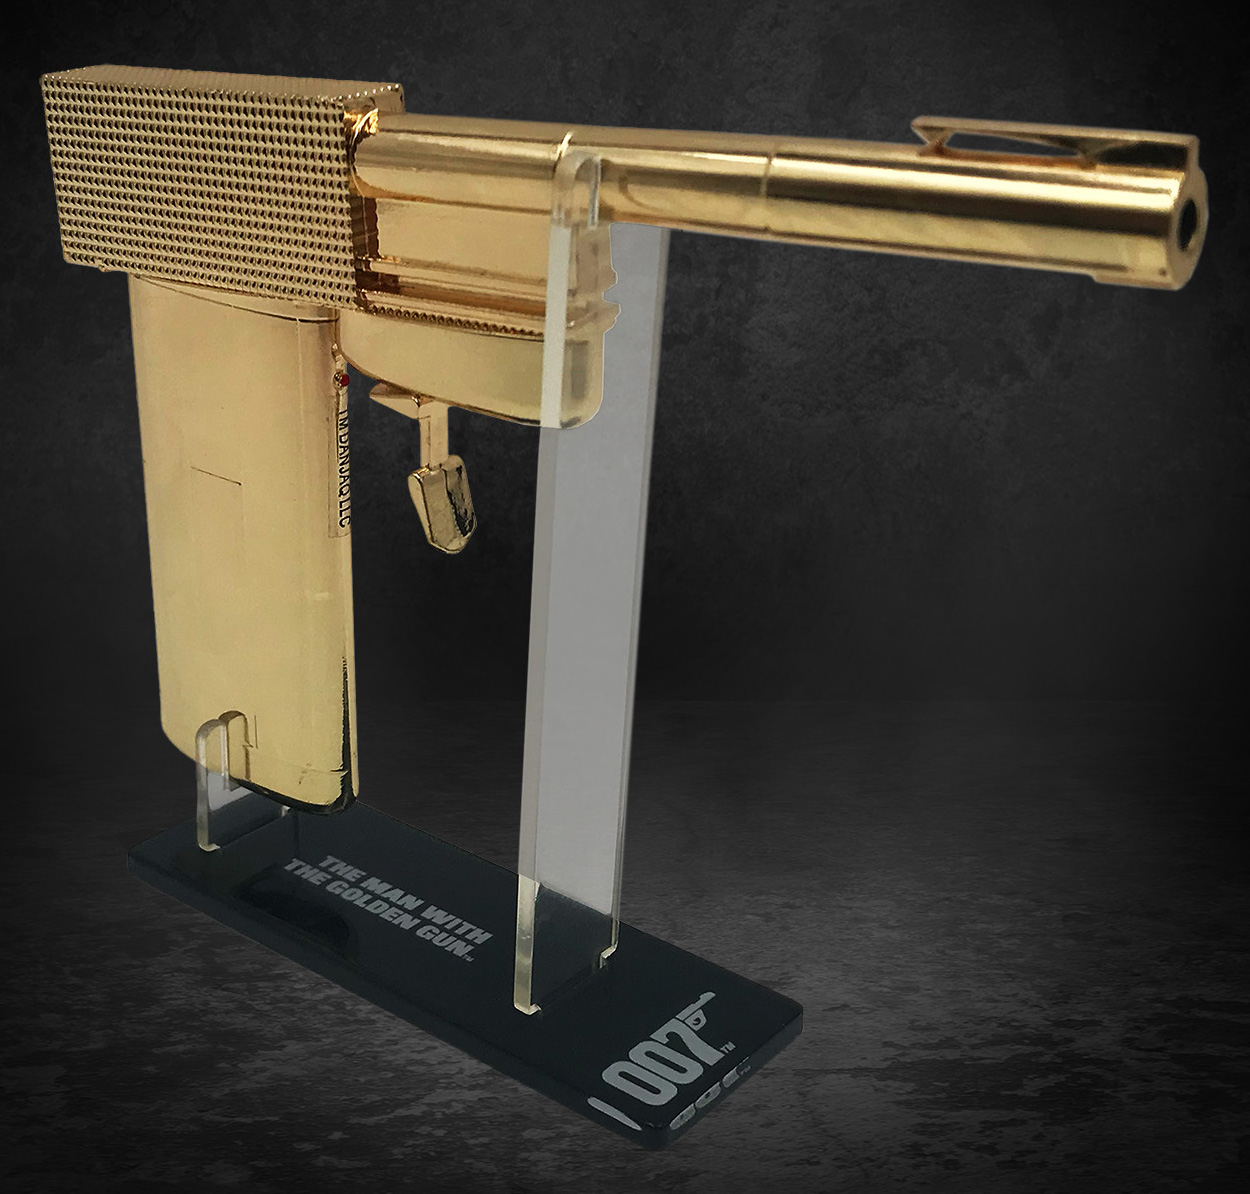 James Bond Golden Gun Prop Replica by Factory Entertainment metal front